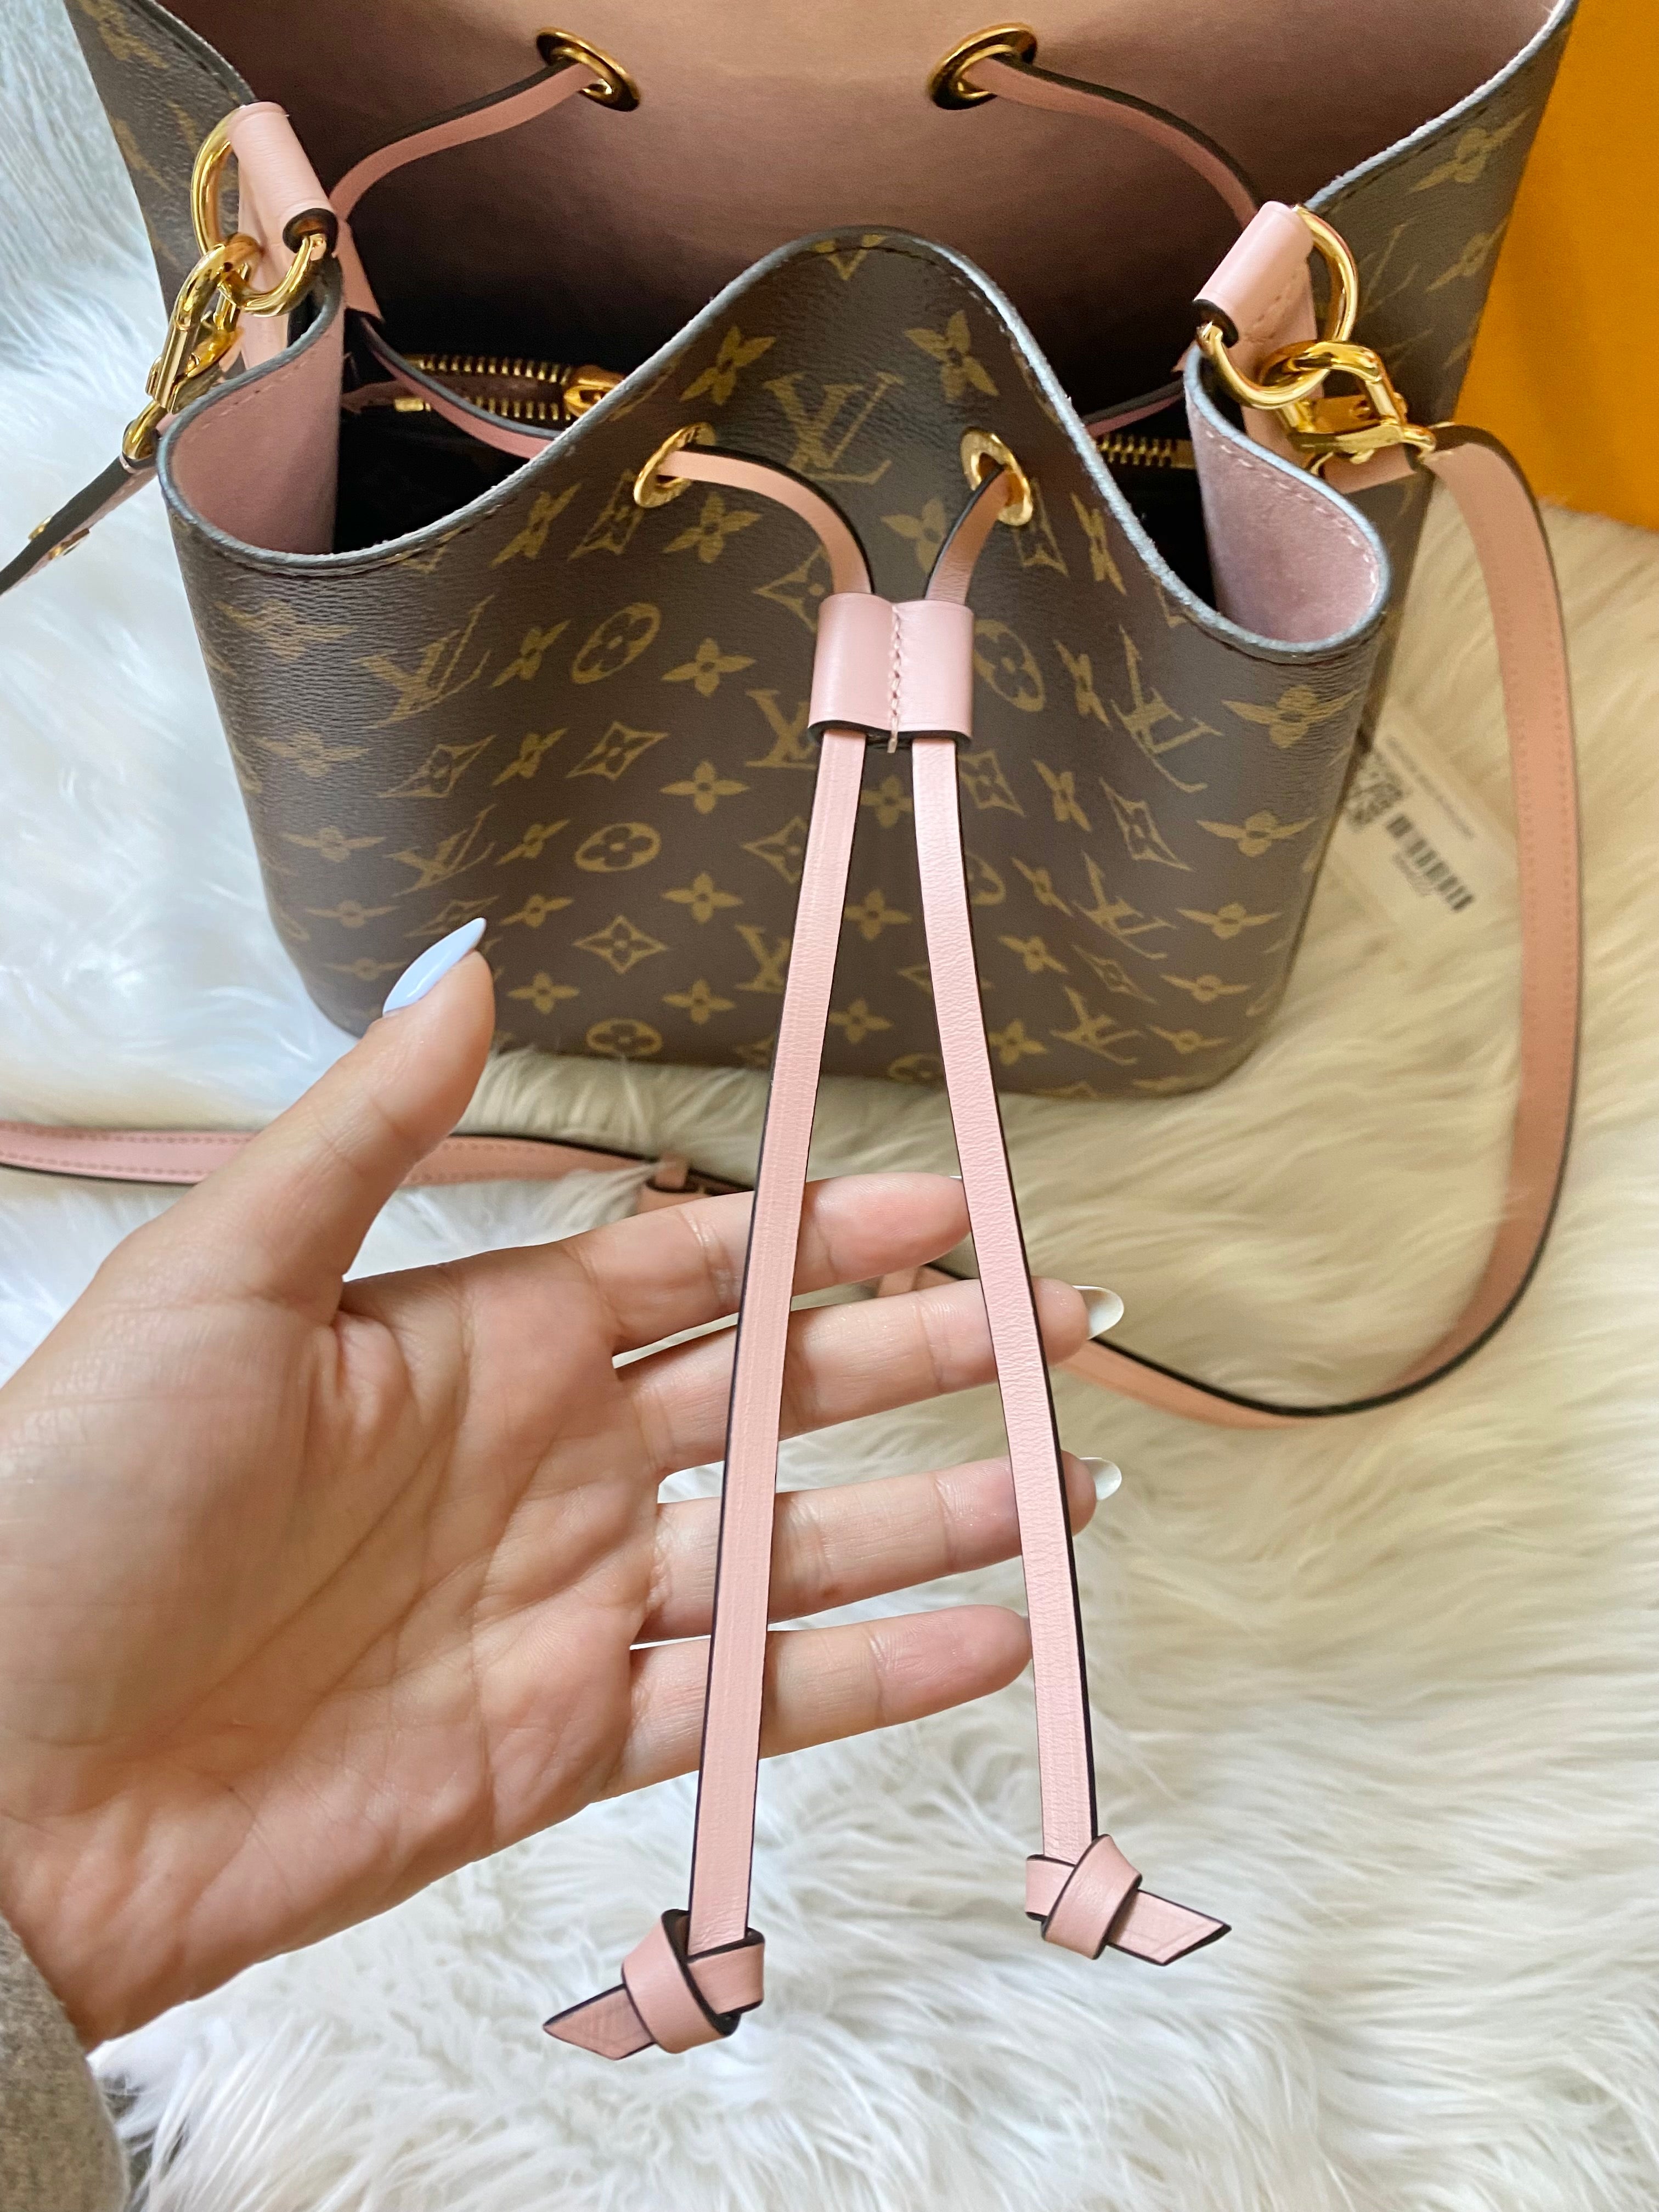 Louis Vuitton Neonoe Bag Pink